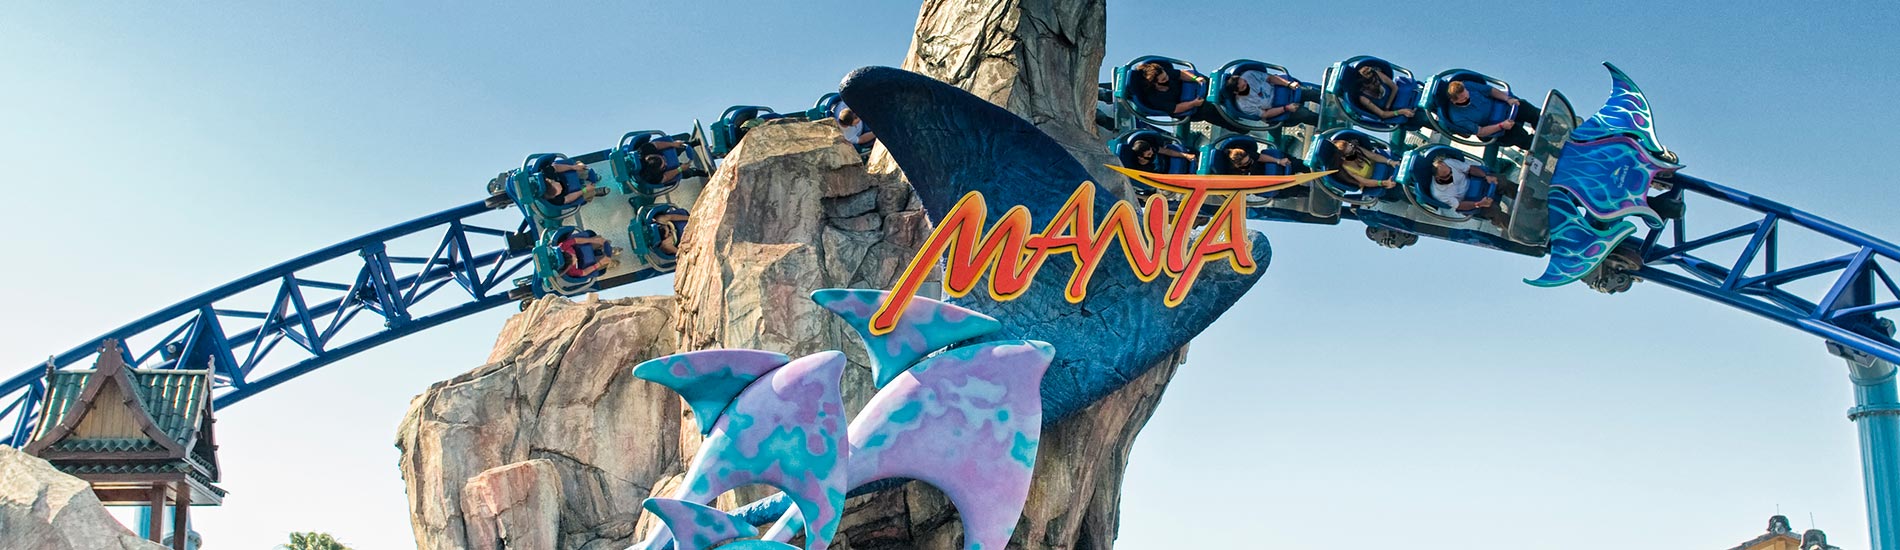 Manta Roller Coaster at SeaWorld San Diego